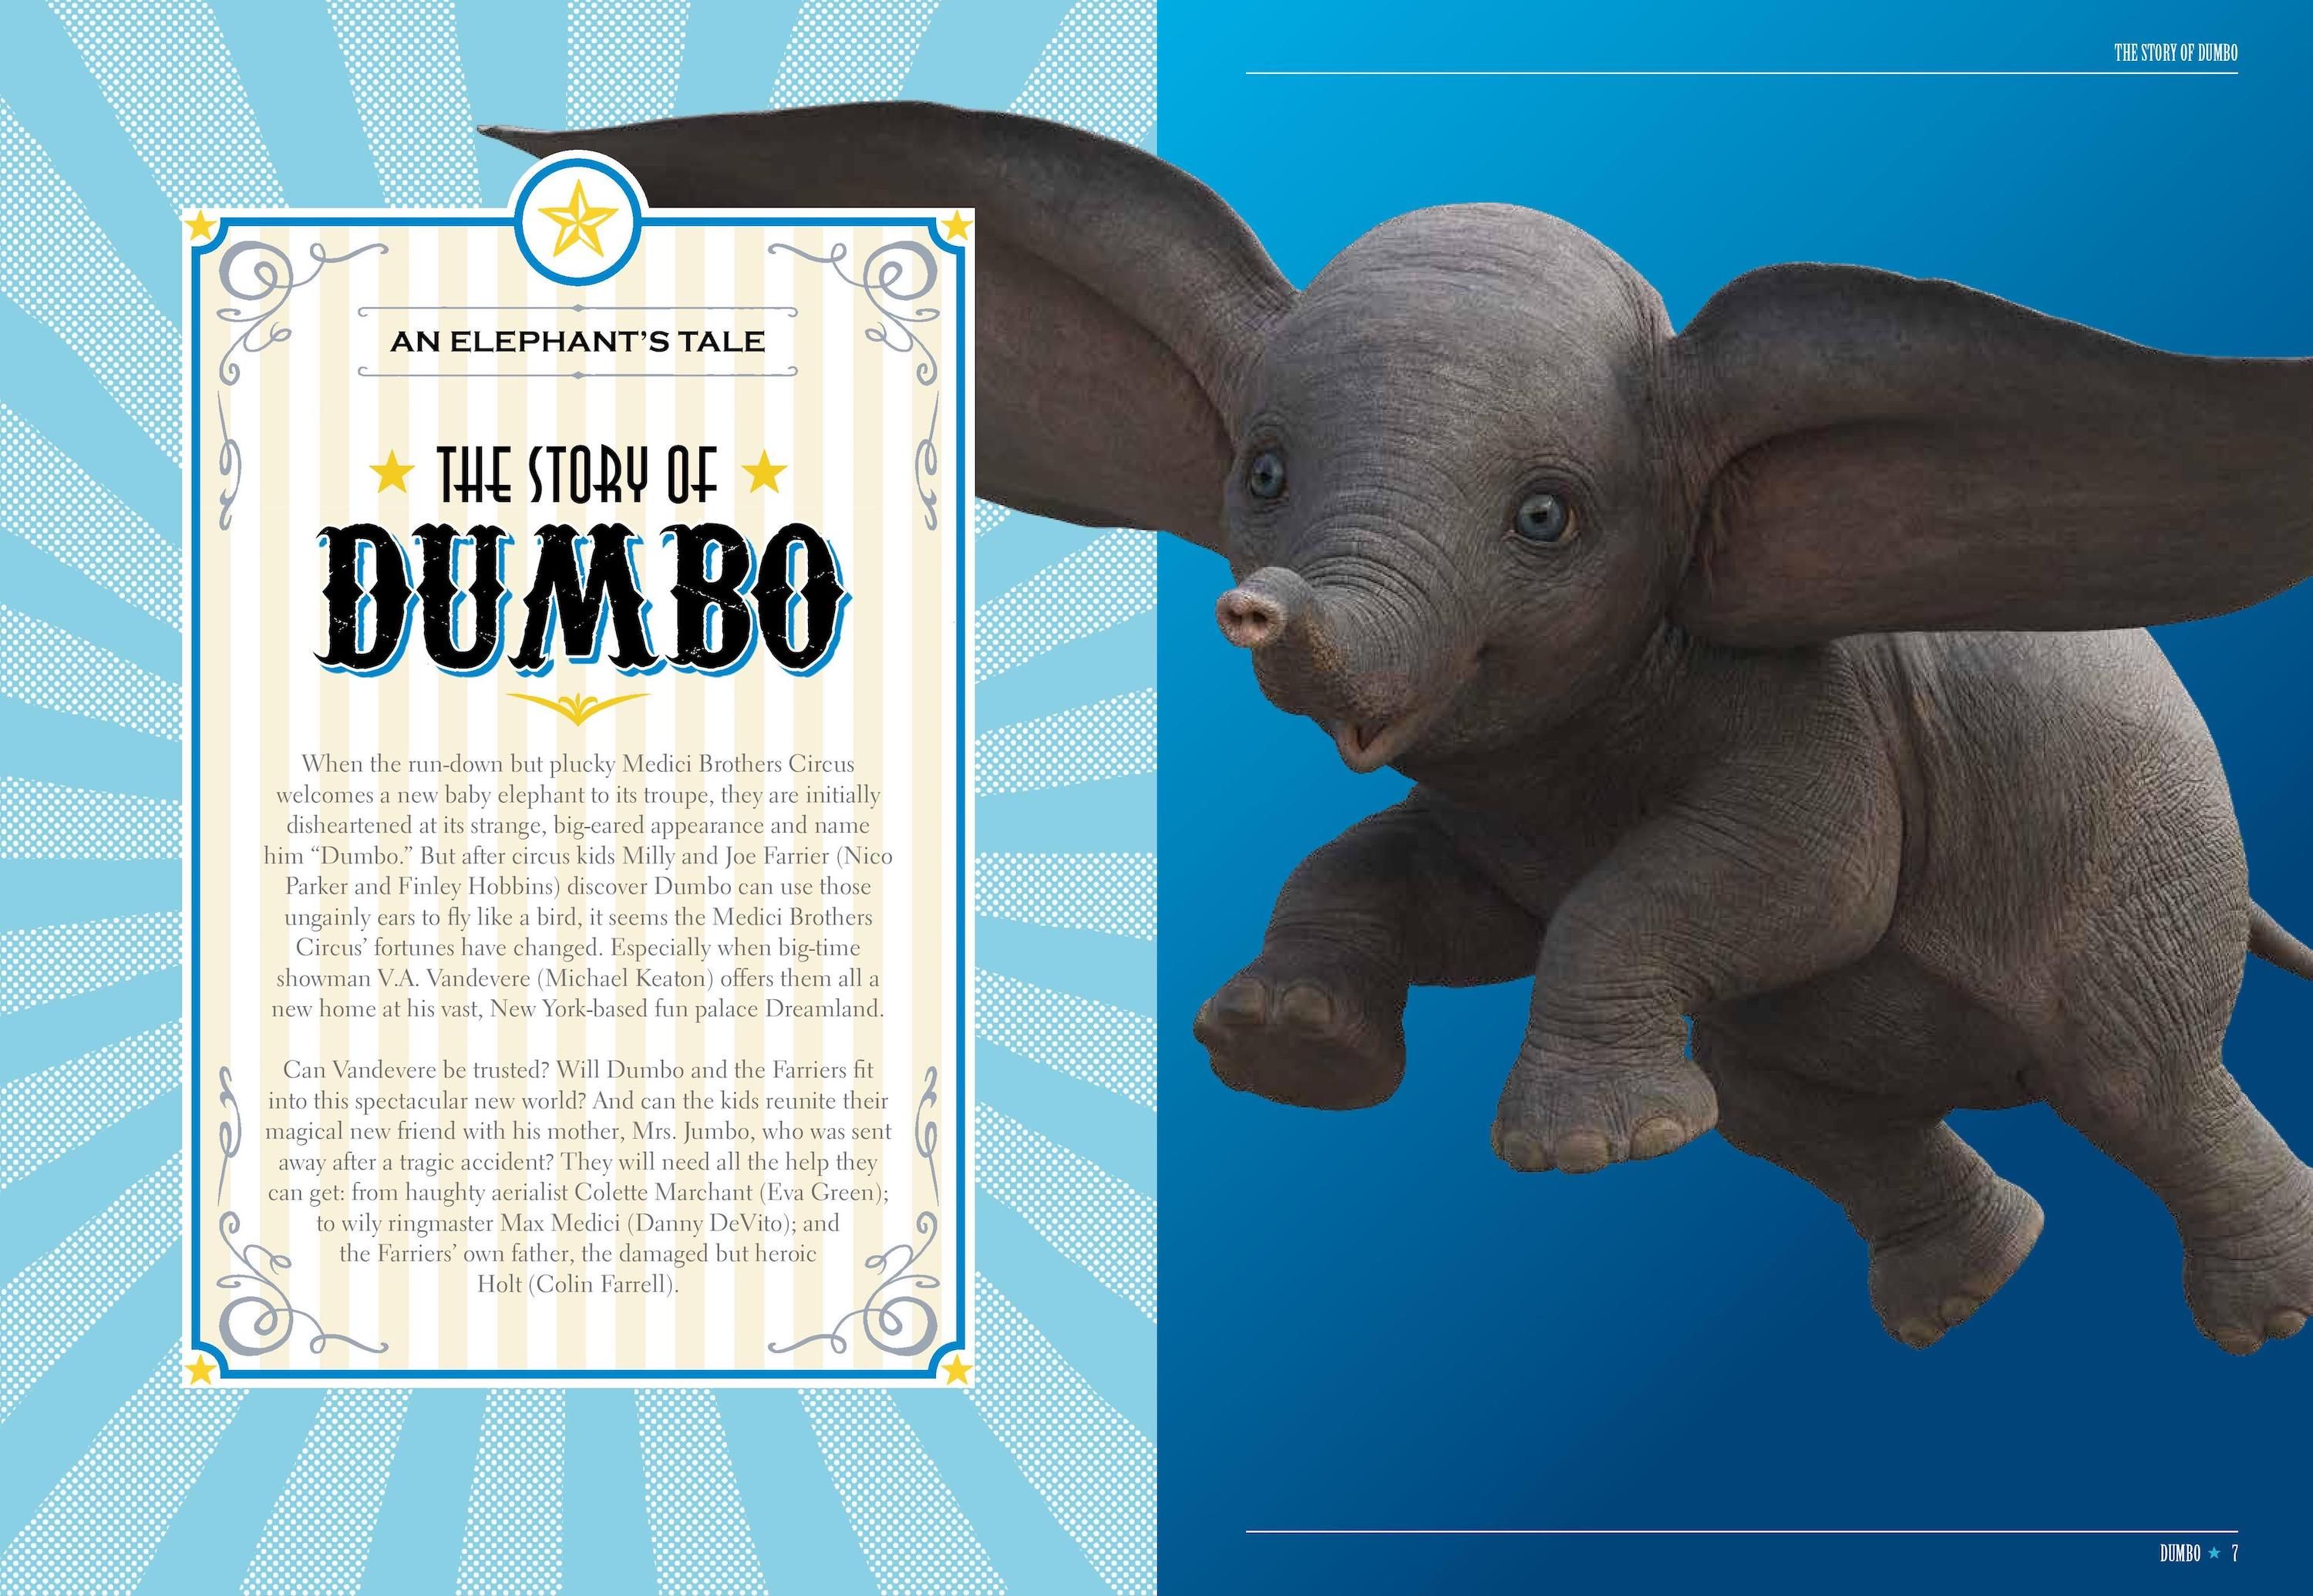 Dumbo Official Movie Guide - Story of Dumbo